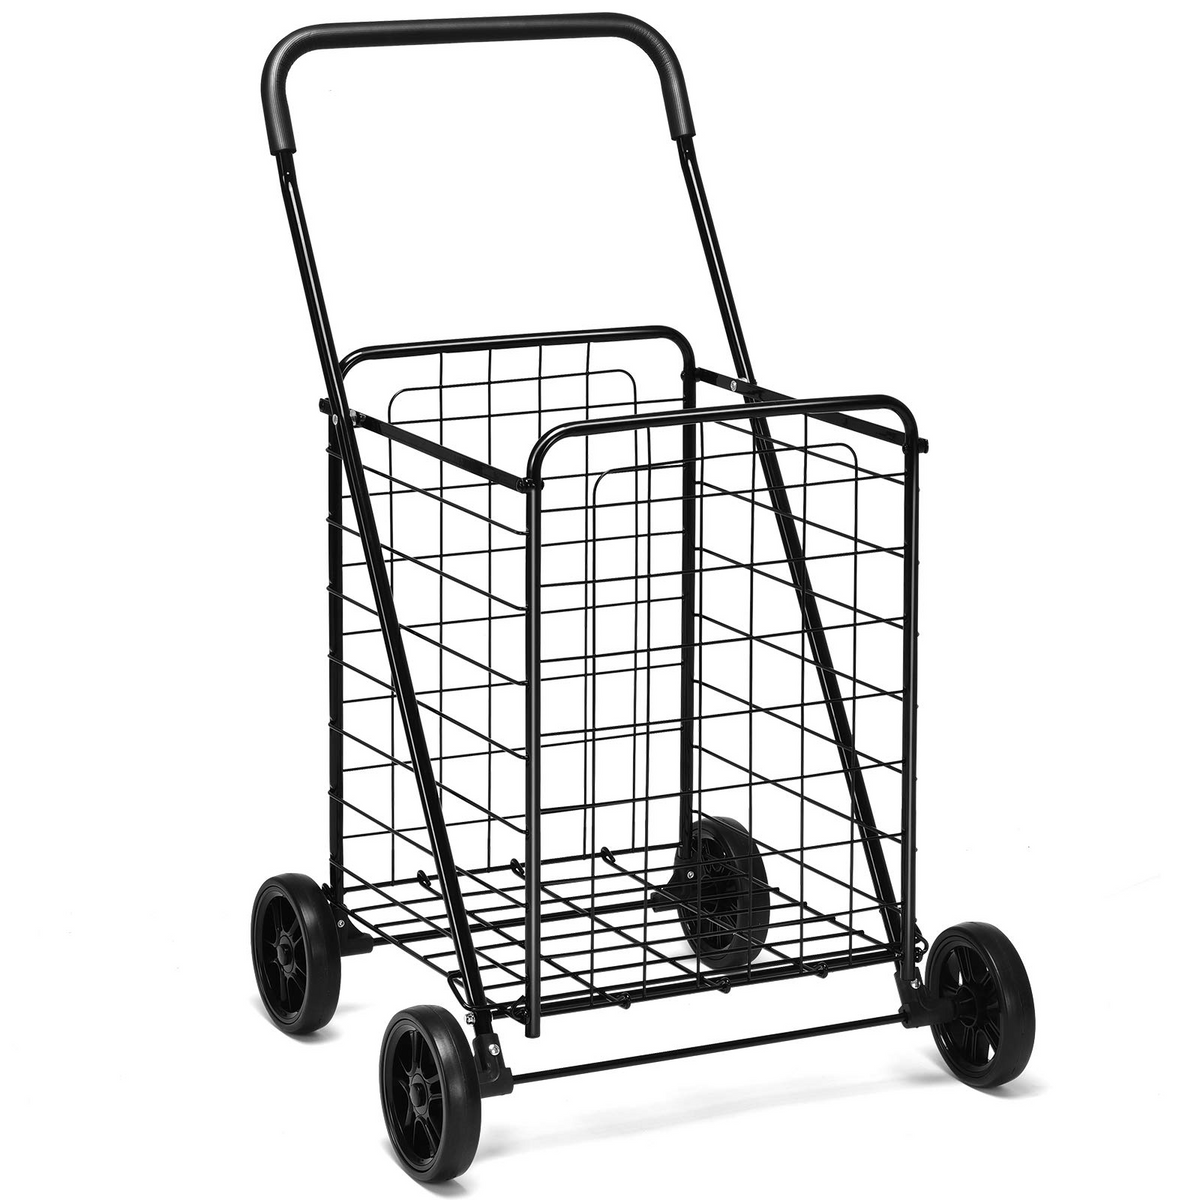 Goplus Folding Shopping Cart, Light Weight Utility Grocery Cart with Wheels, Portable Cart - GoplusUS